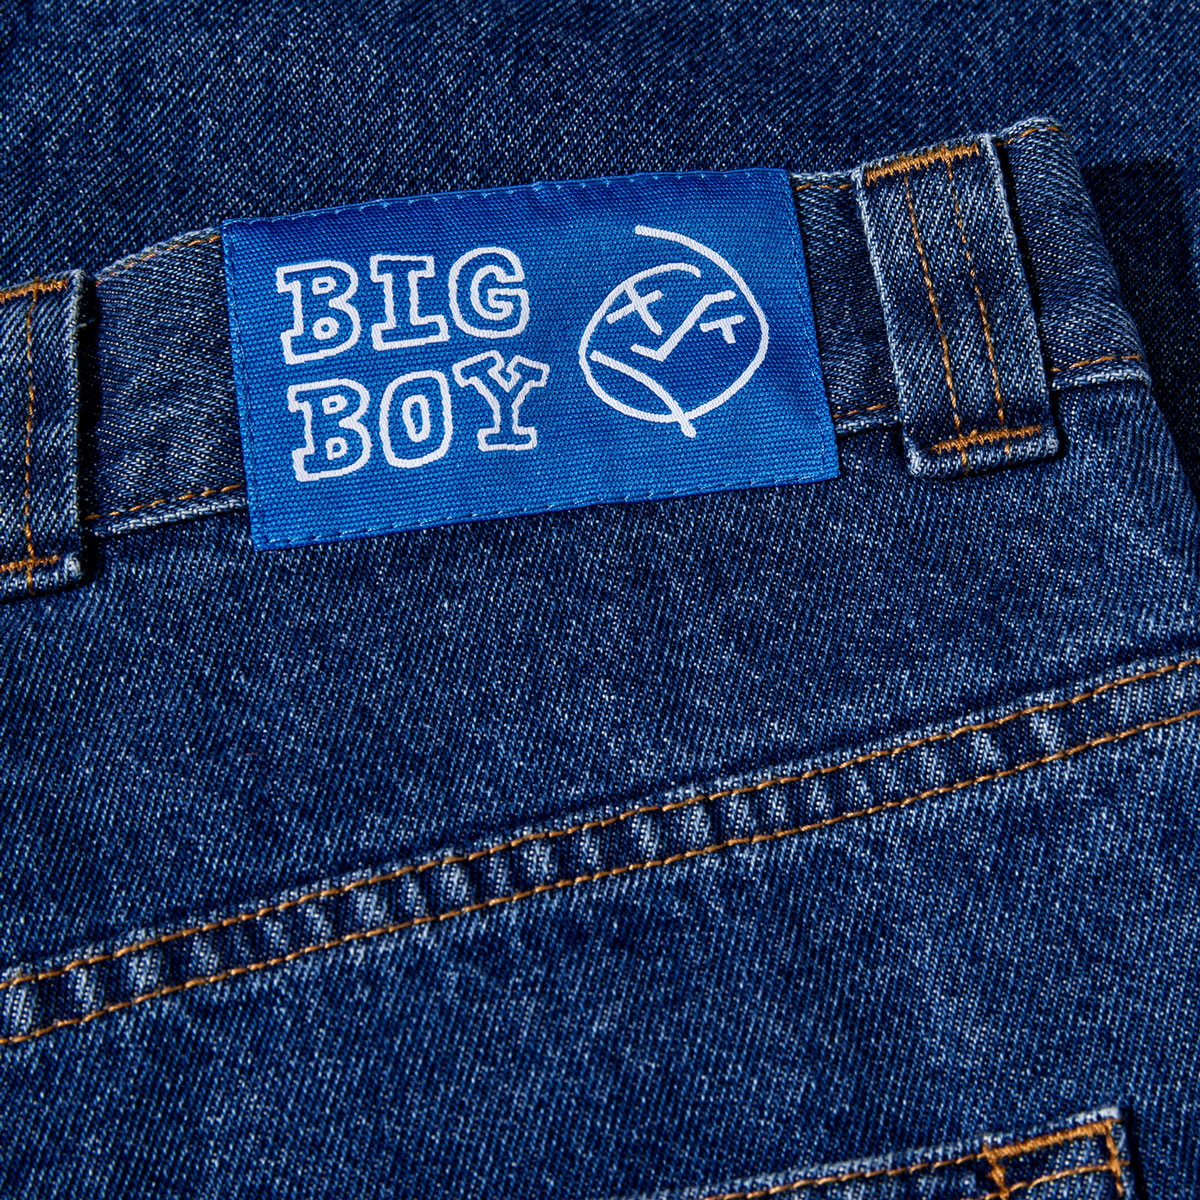 Polar Big Boy Jeans - Dark Blue image 4